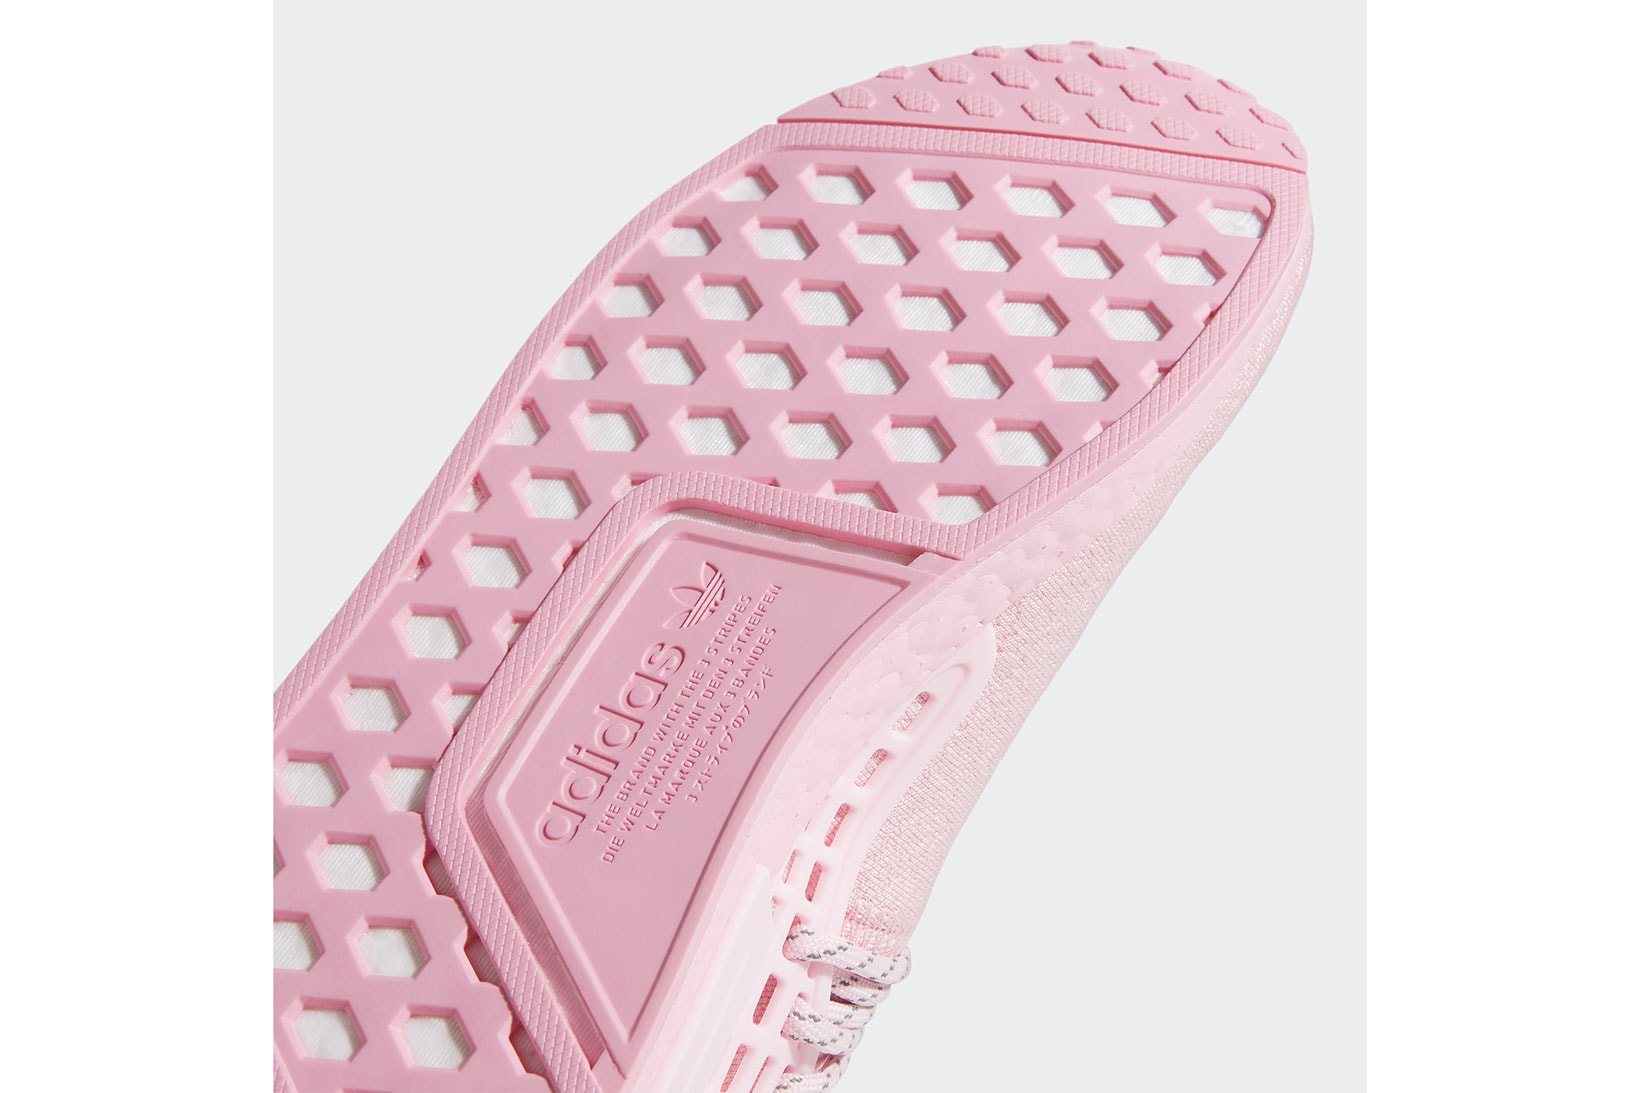 pharrell williams adidas originals hu nmd collaboration pink sneakers footwear shoes kicks sneakerhead heel